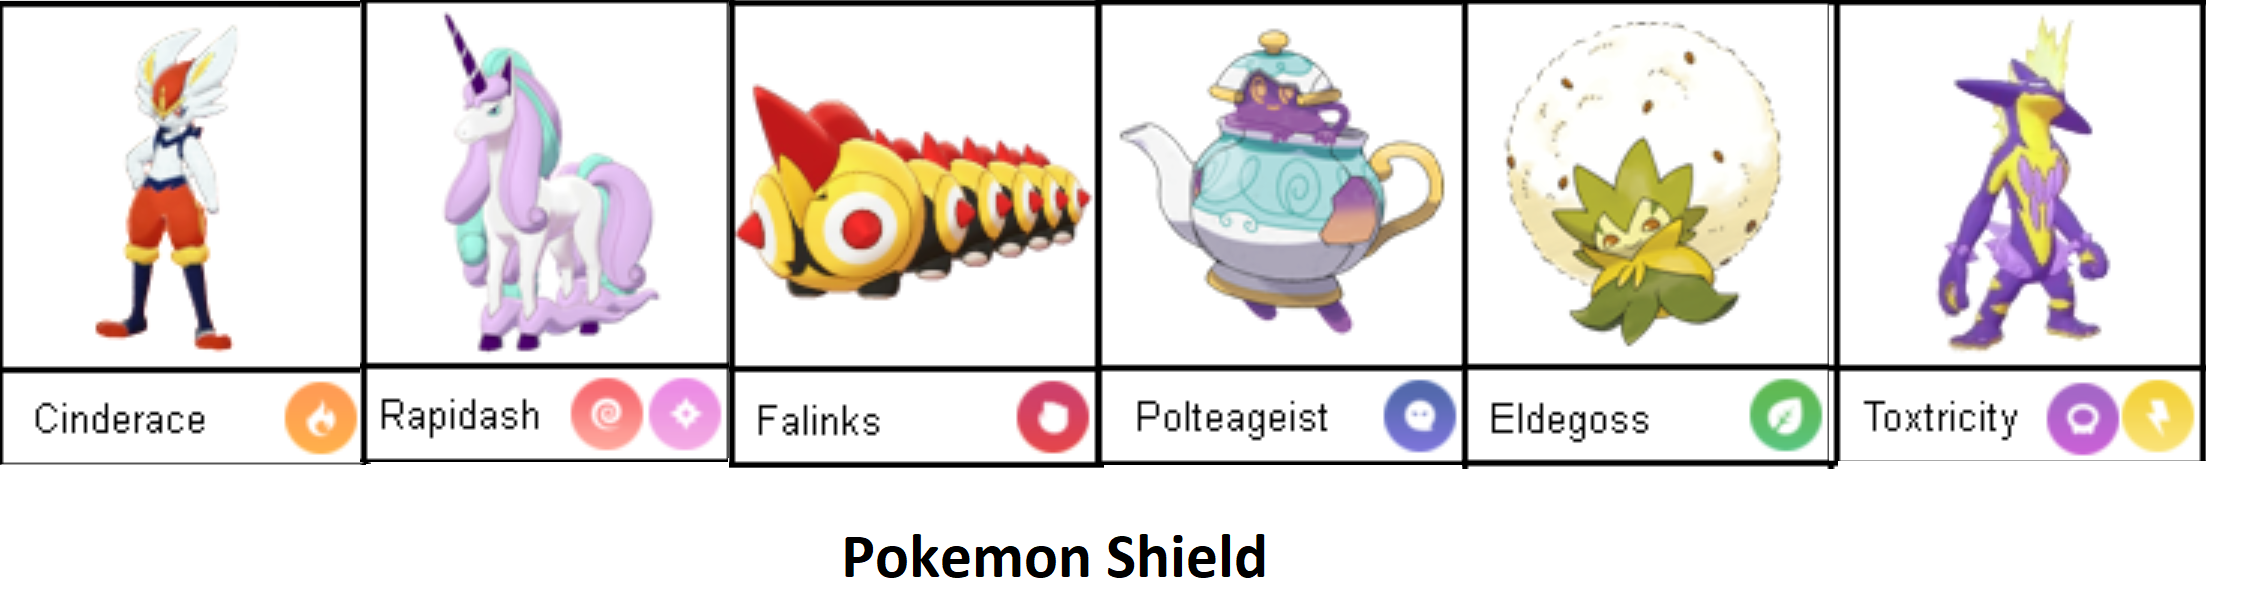 Pokemon_Shield_Team.png